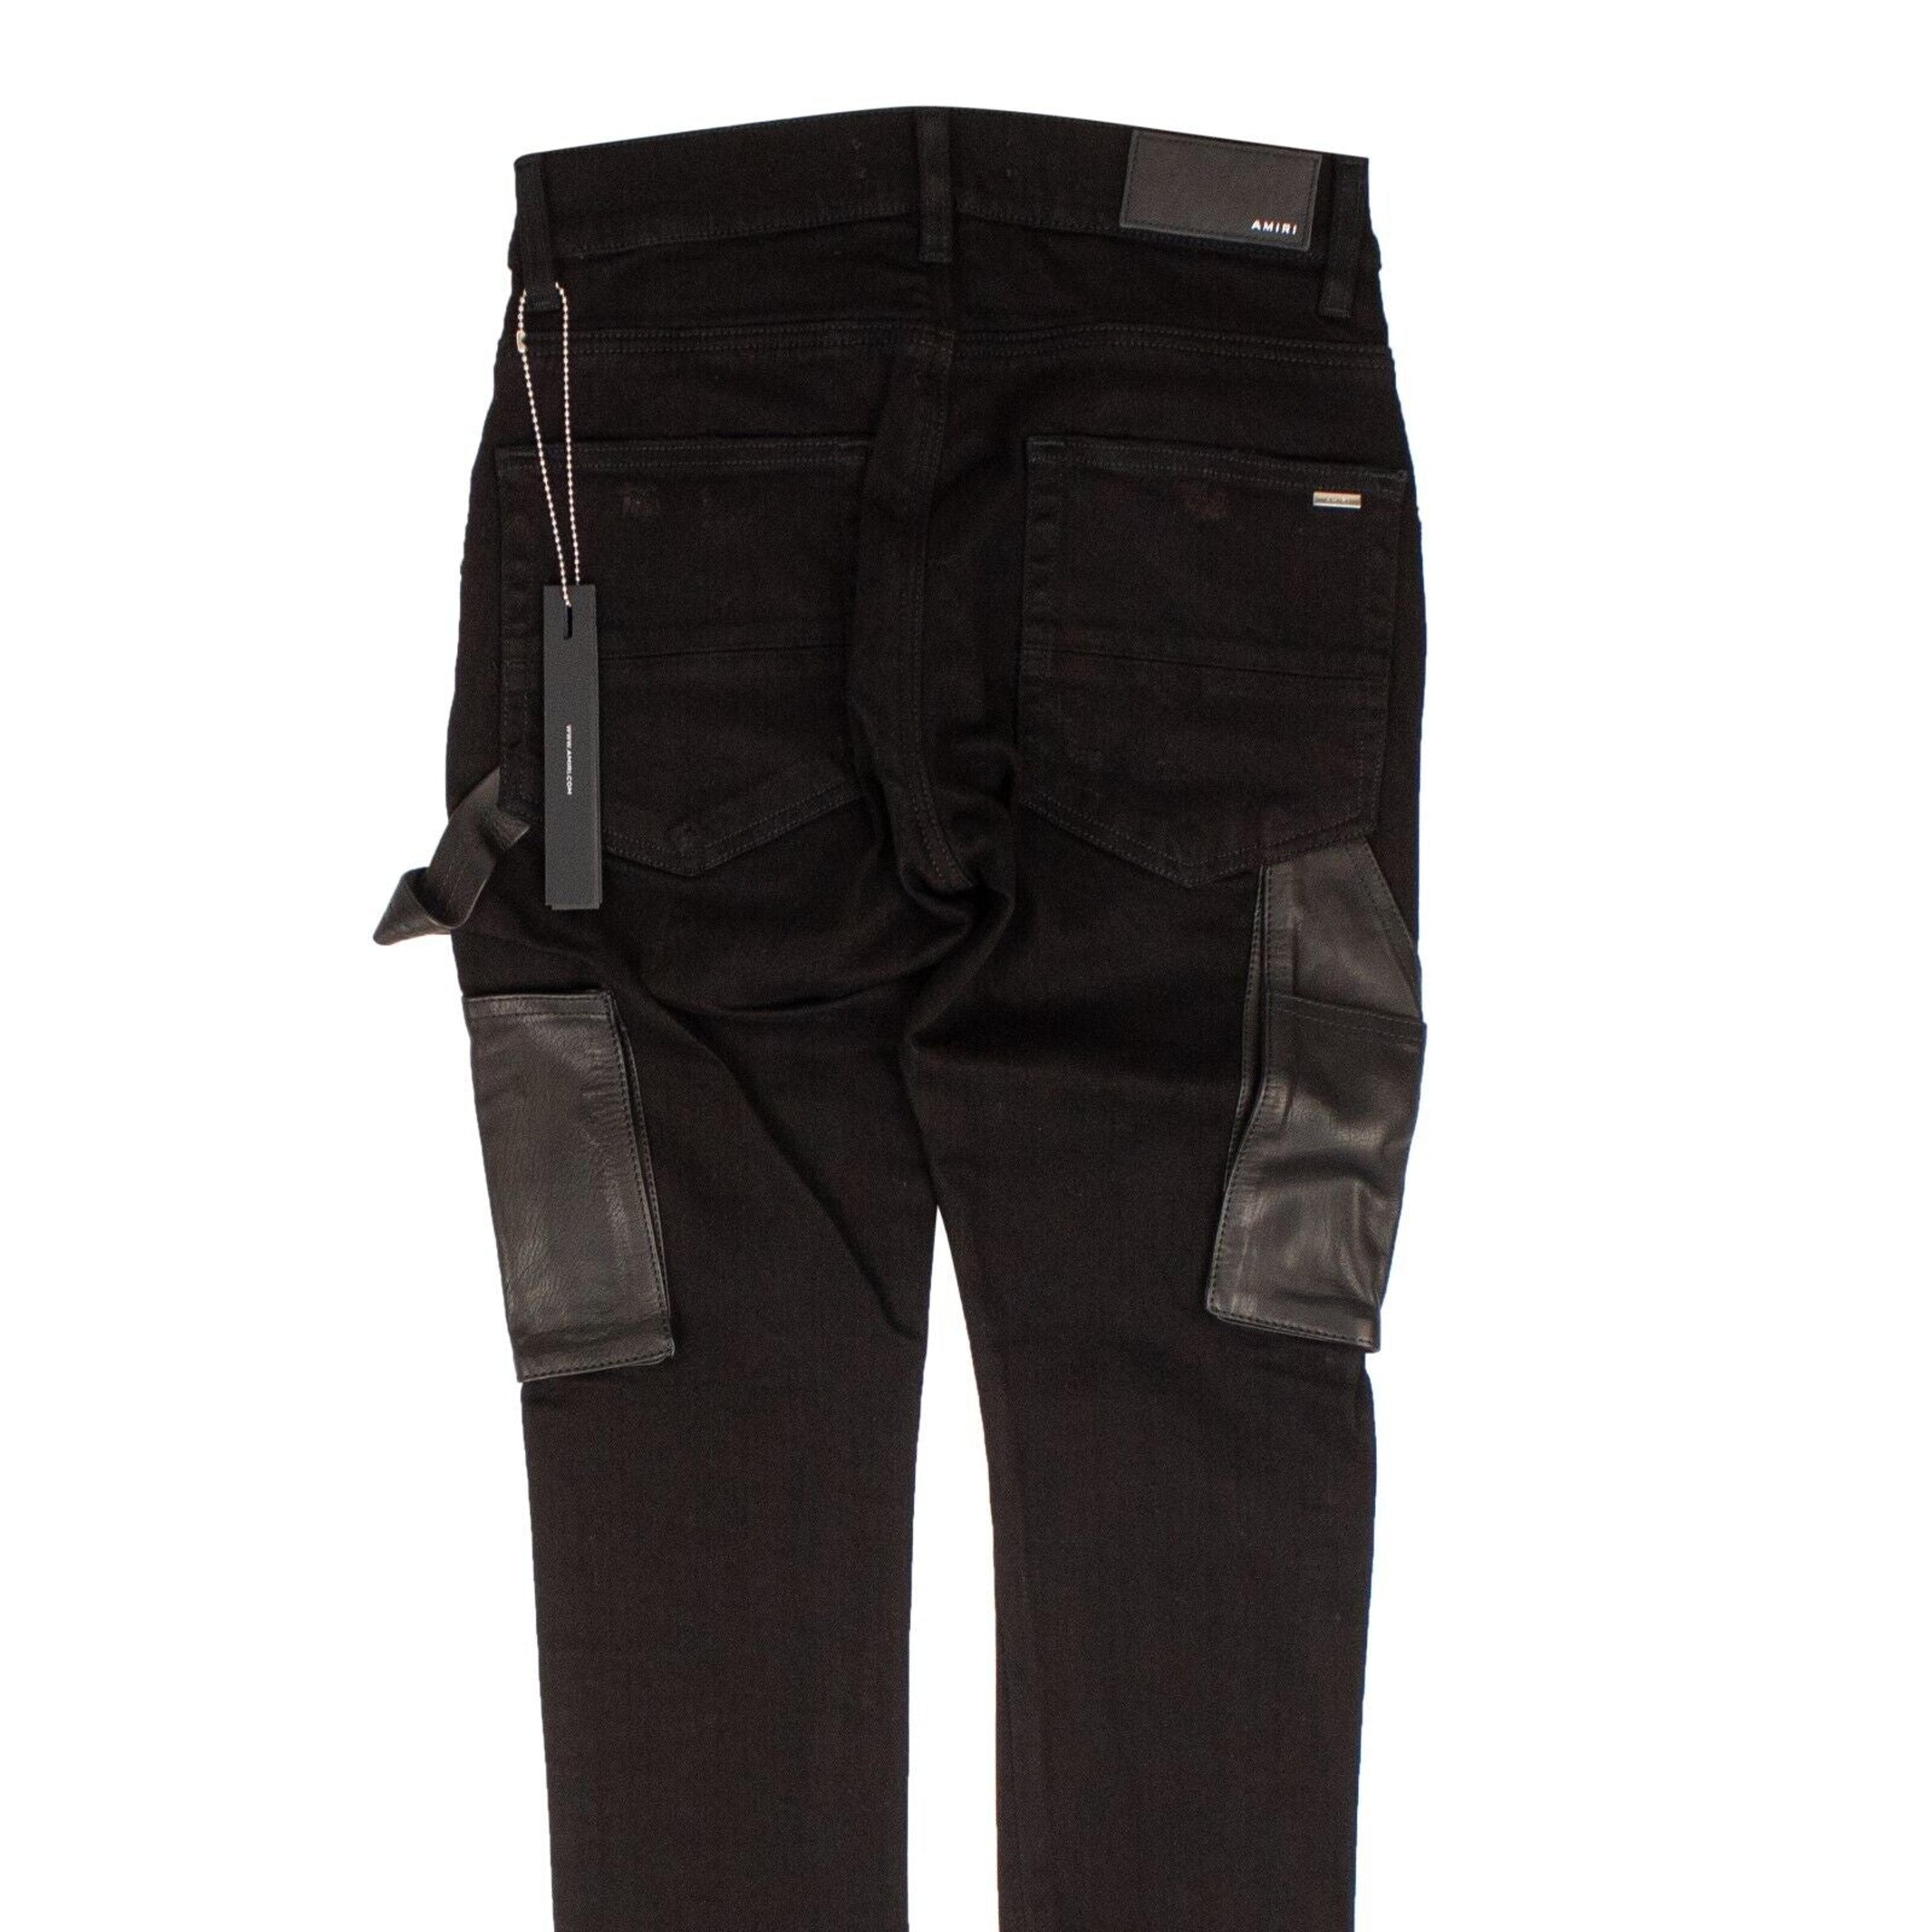 Alternate View 3 of Black Denim Leather Workman Pants